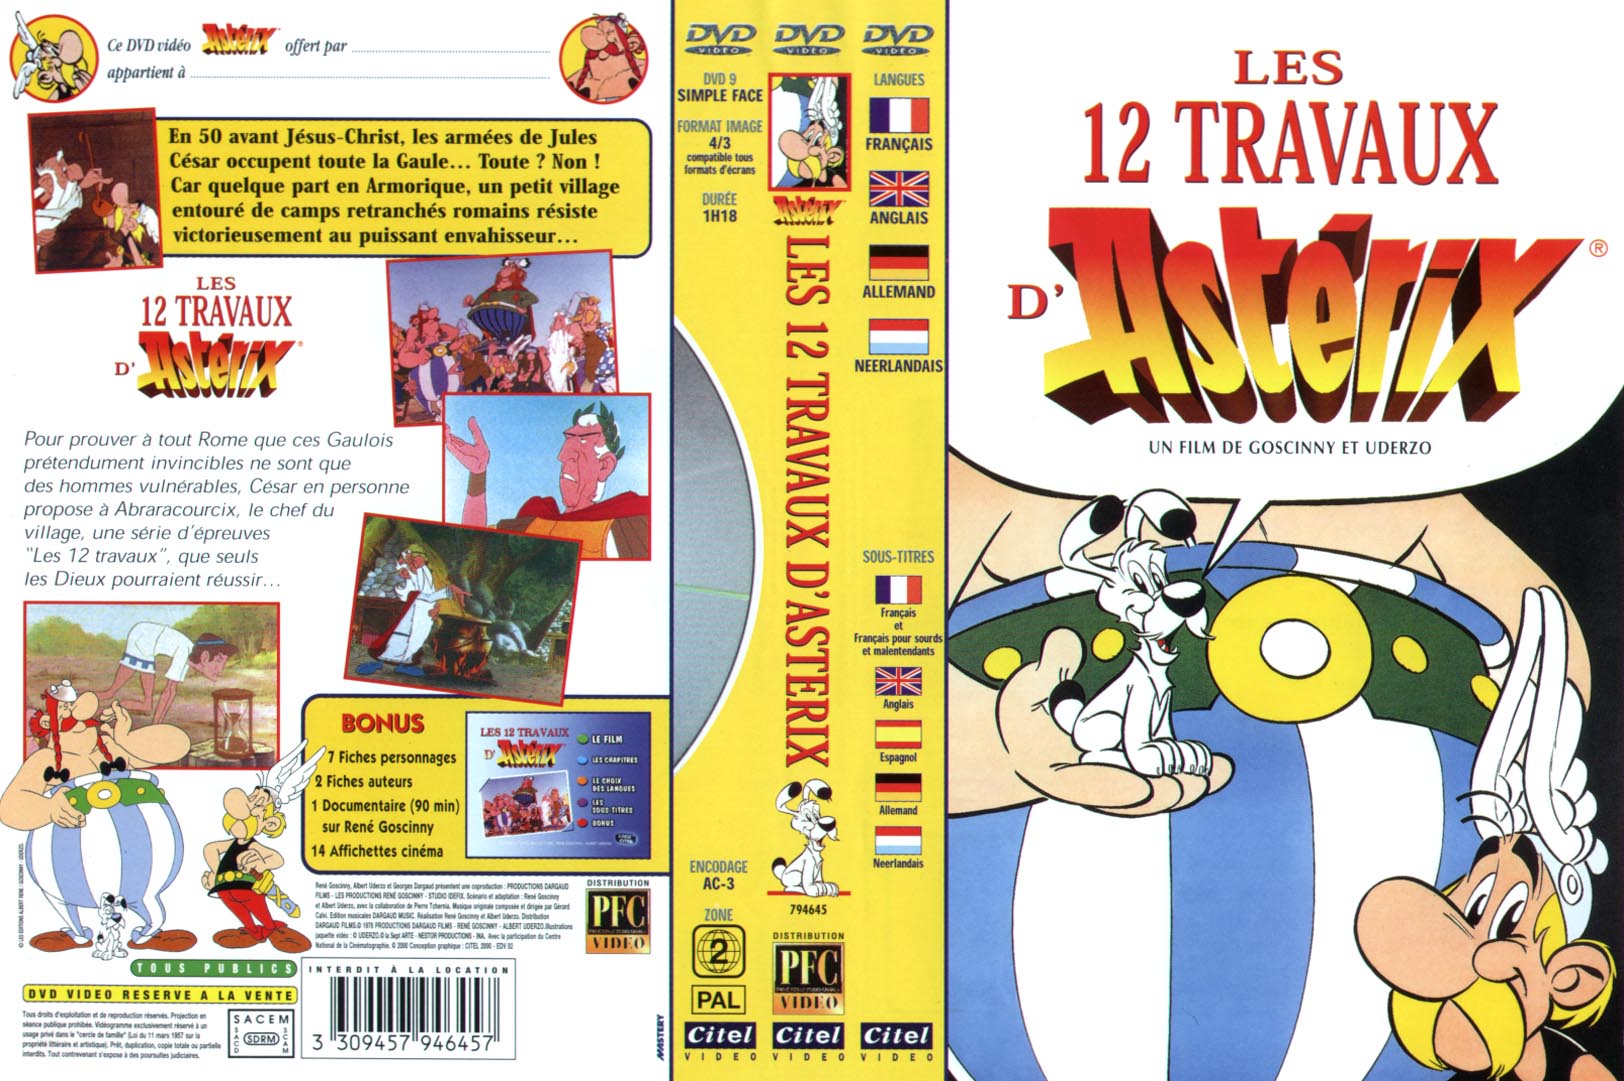 Les 12 travaux d'Asterix